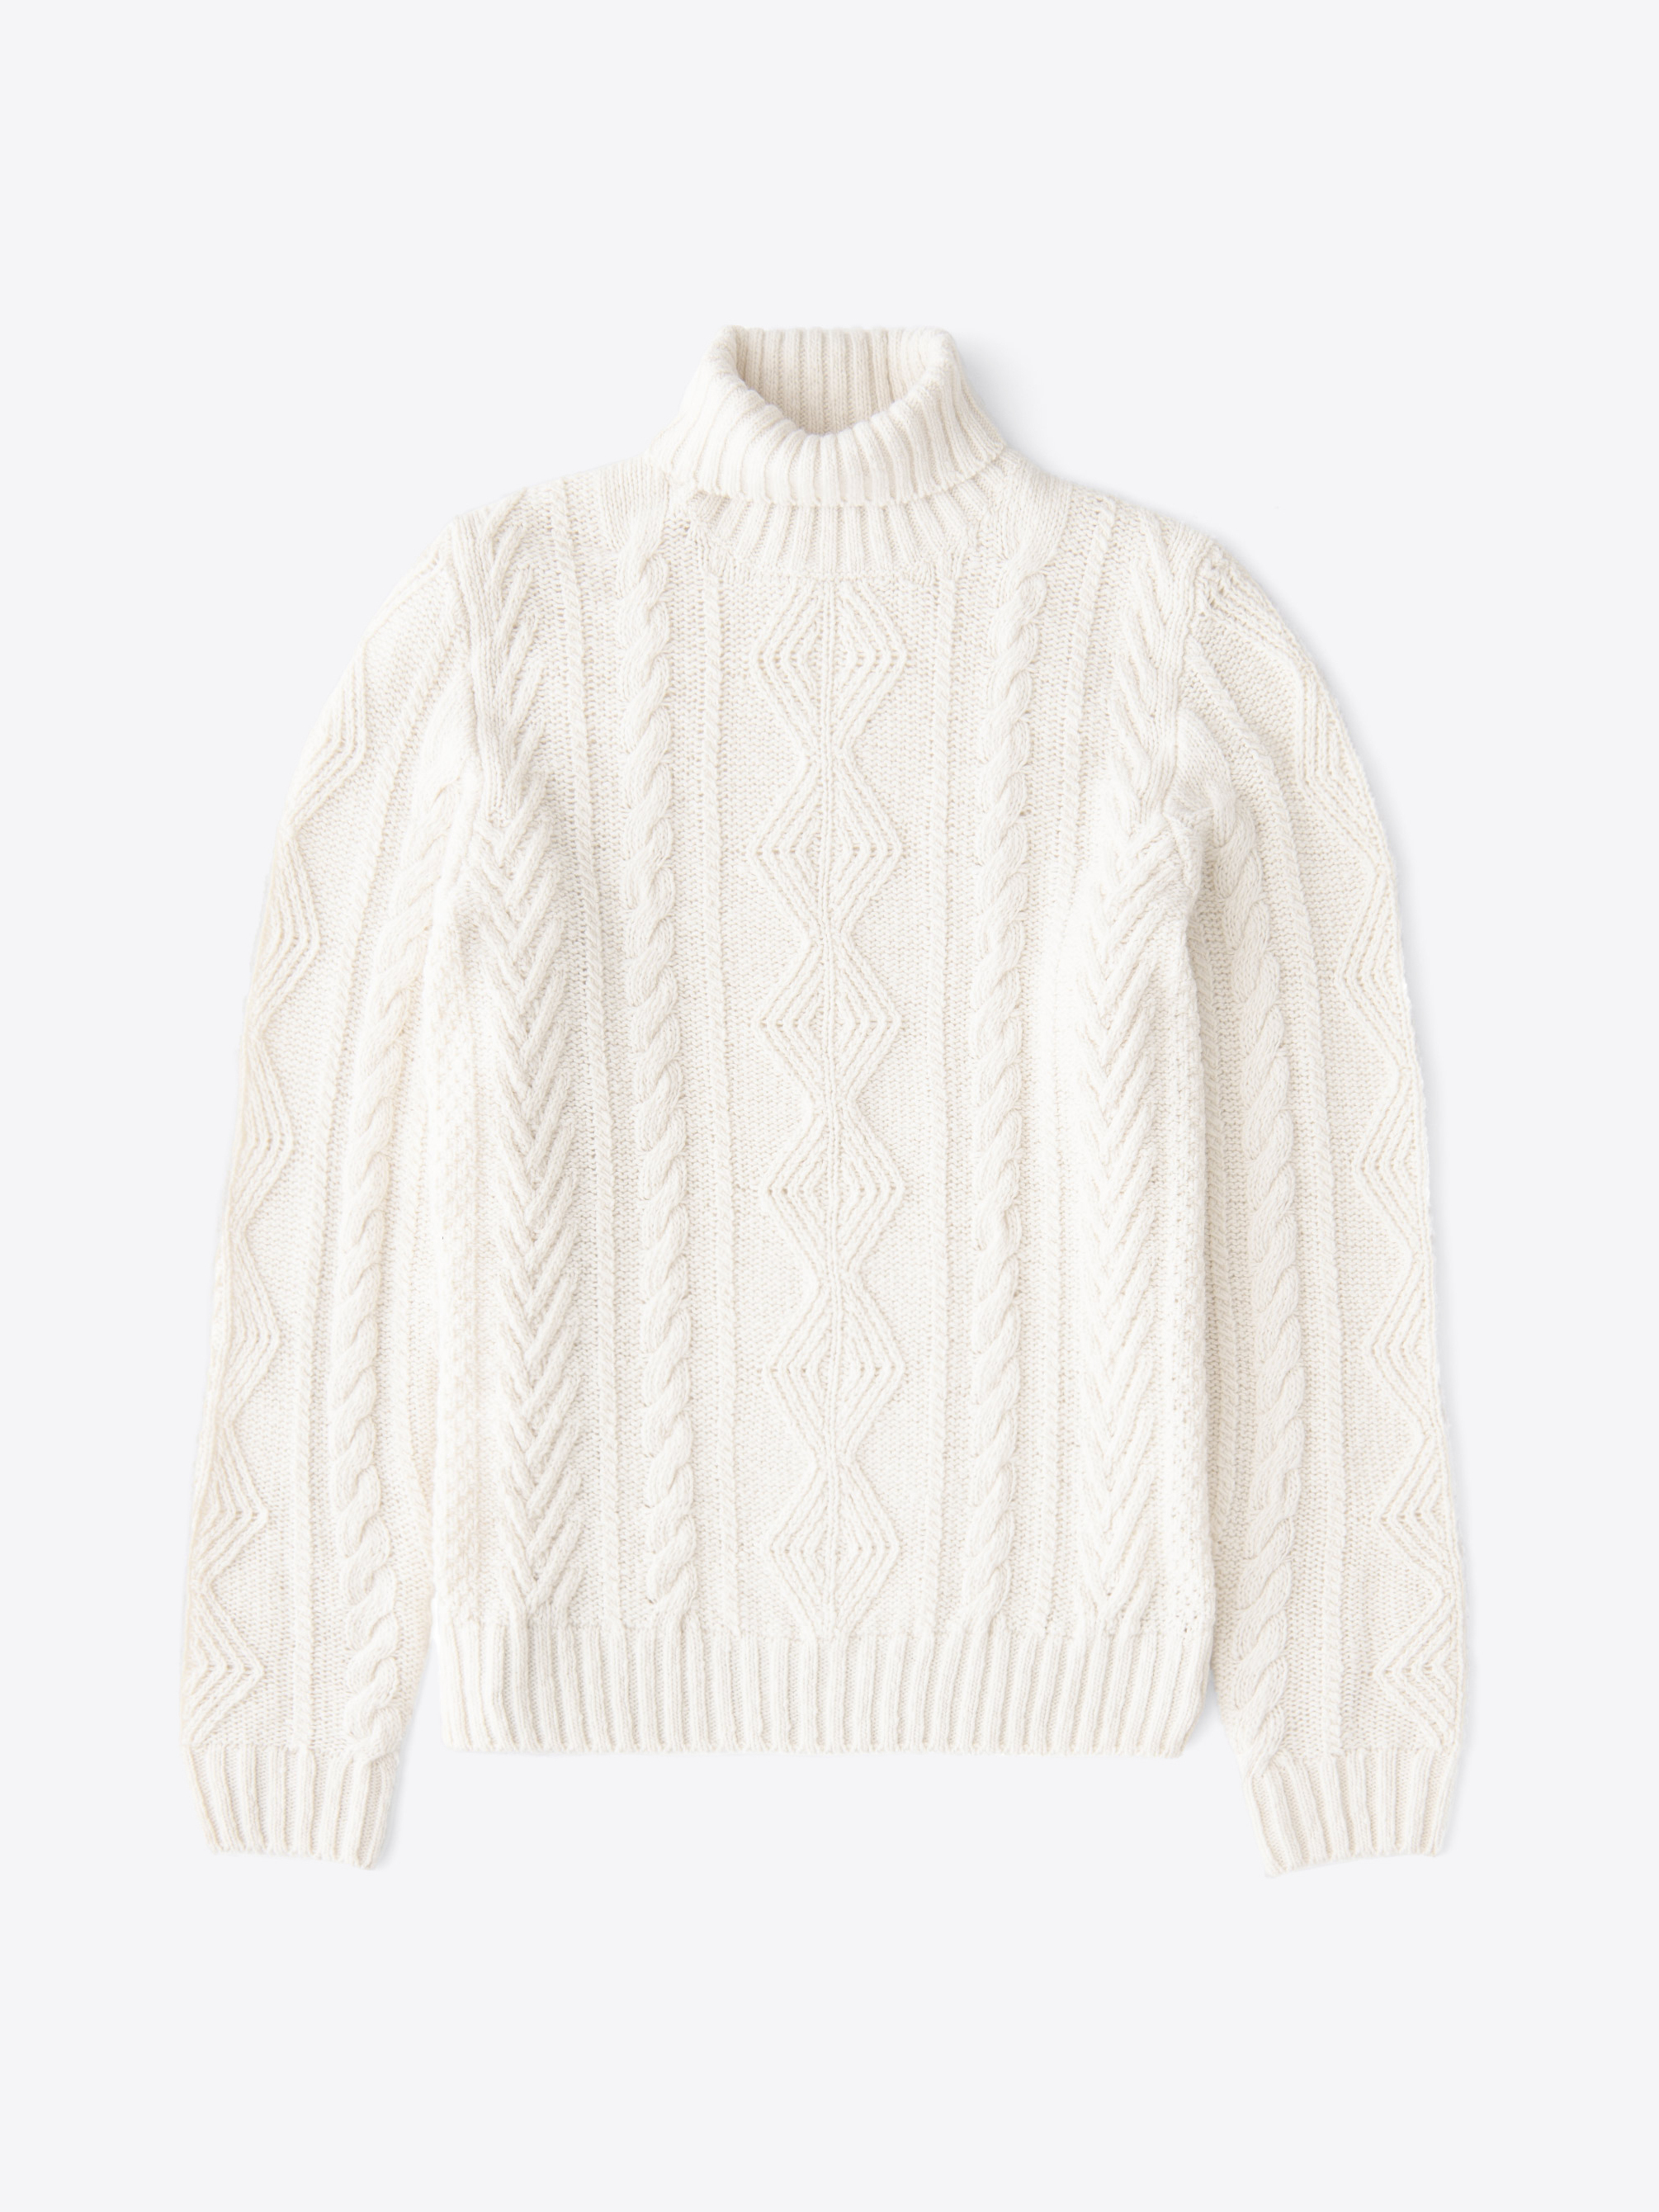 Cream Italian Wool and Cashmere Aran Turtleneck Sweater by Proper Cloth